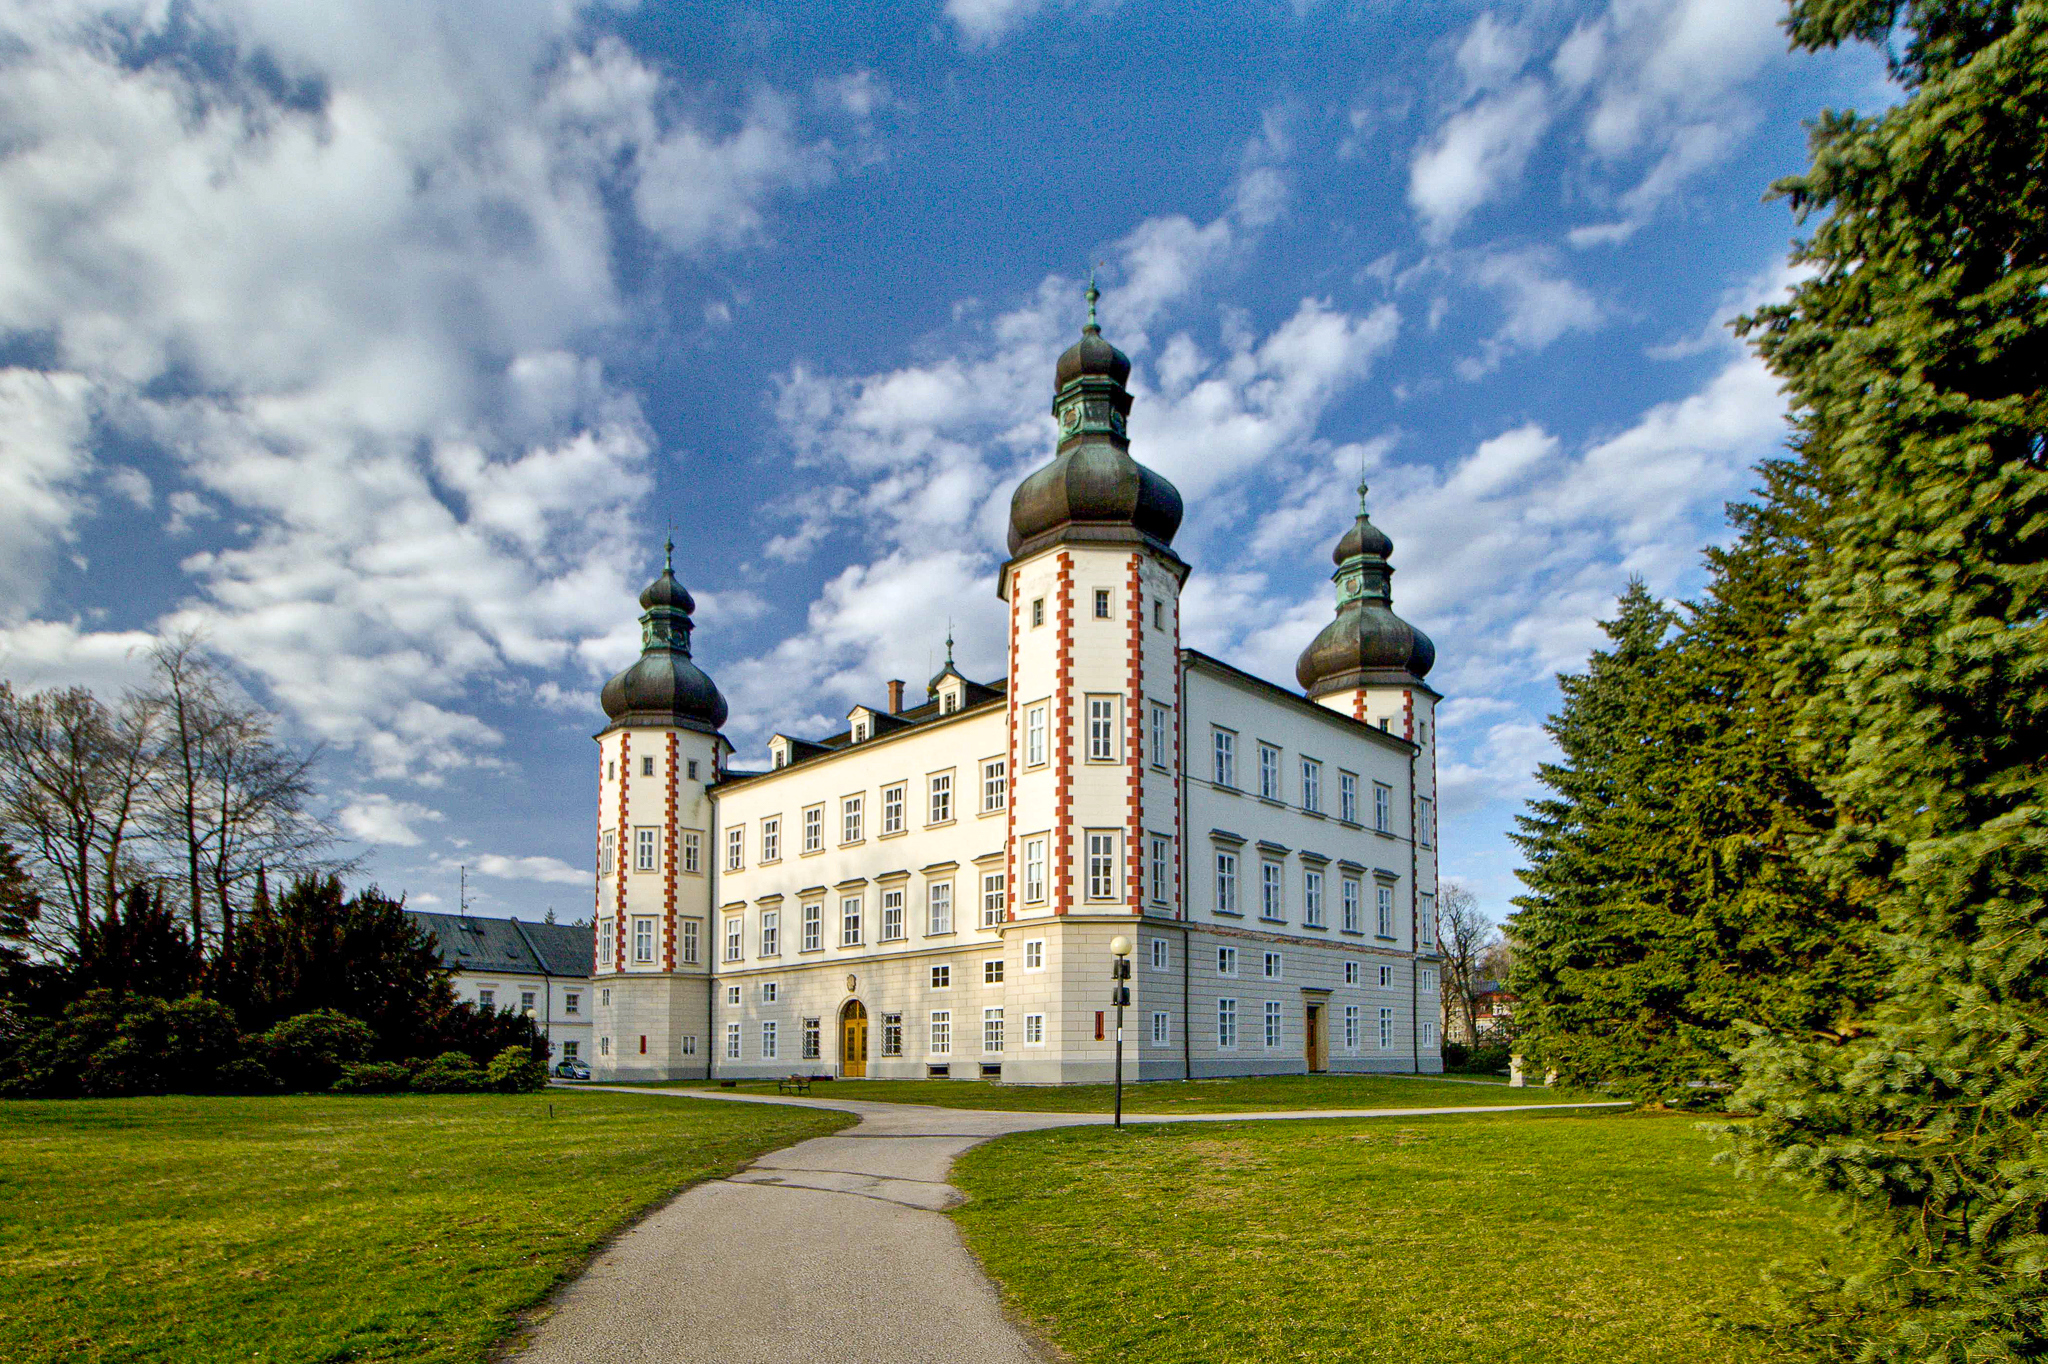 Omnia Hotel Relax & Wellness - Schloss Vrchlabí